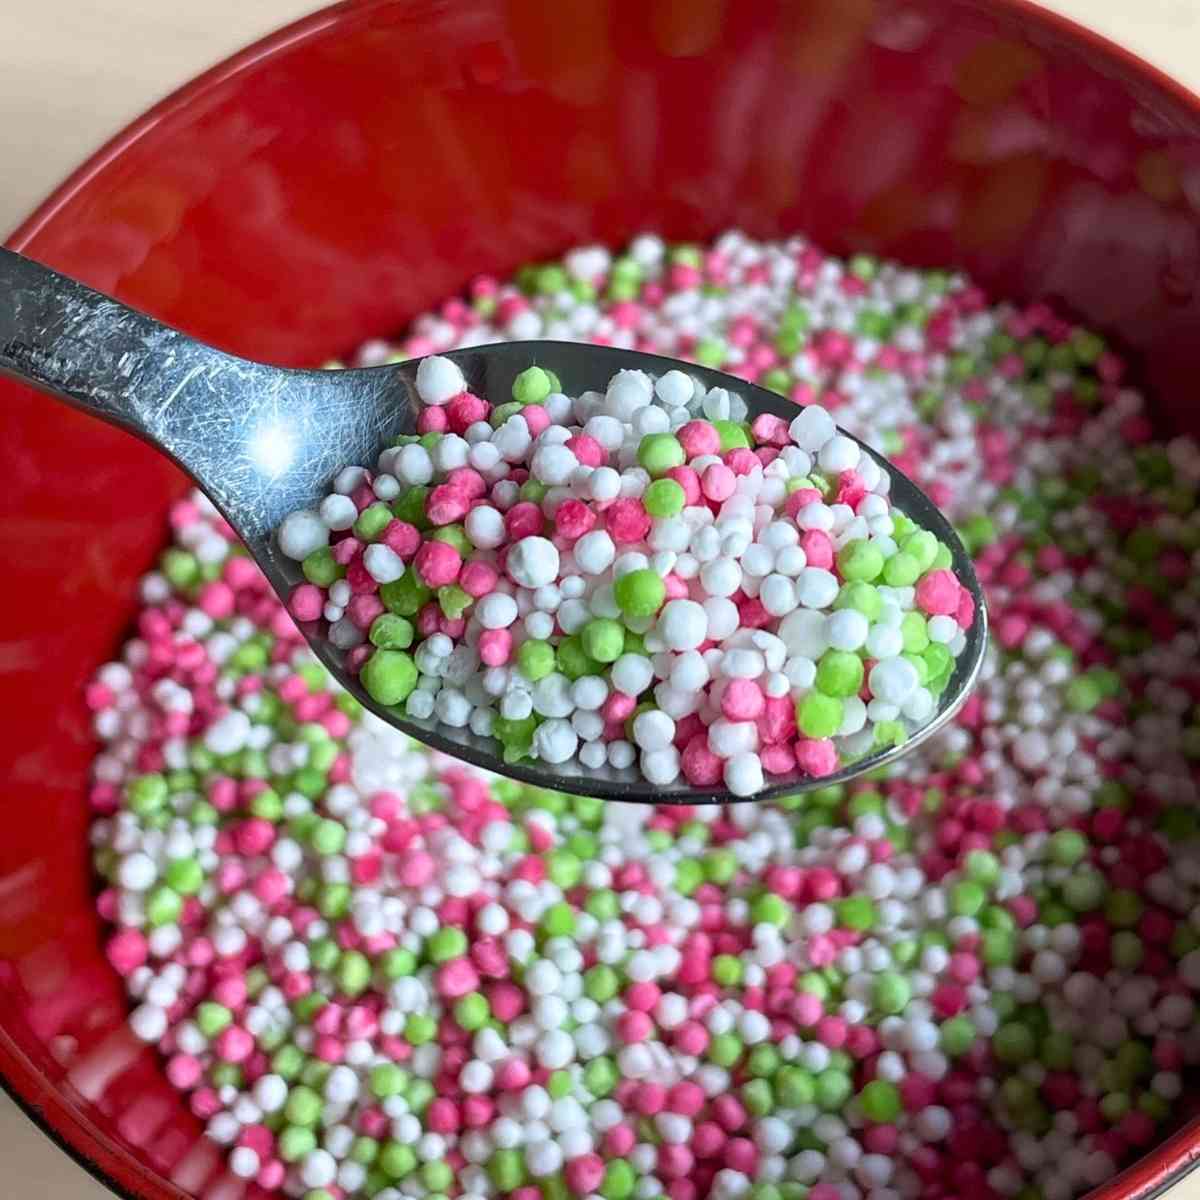 Colourful sago pearls